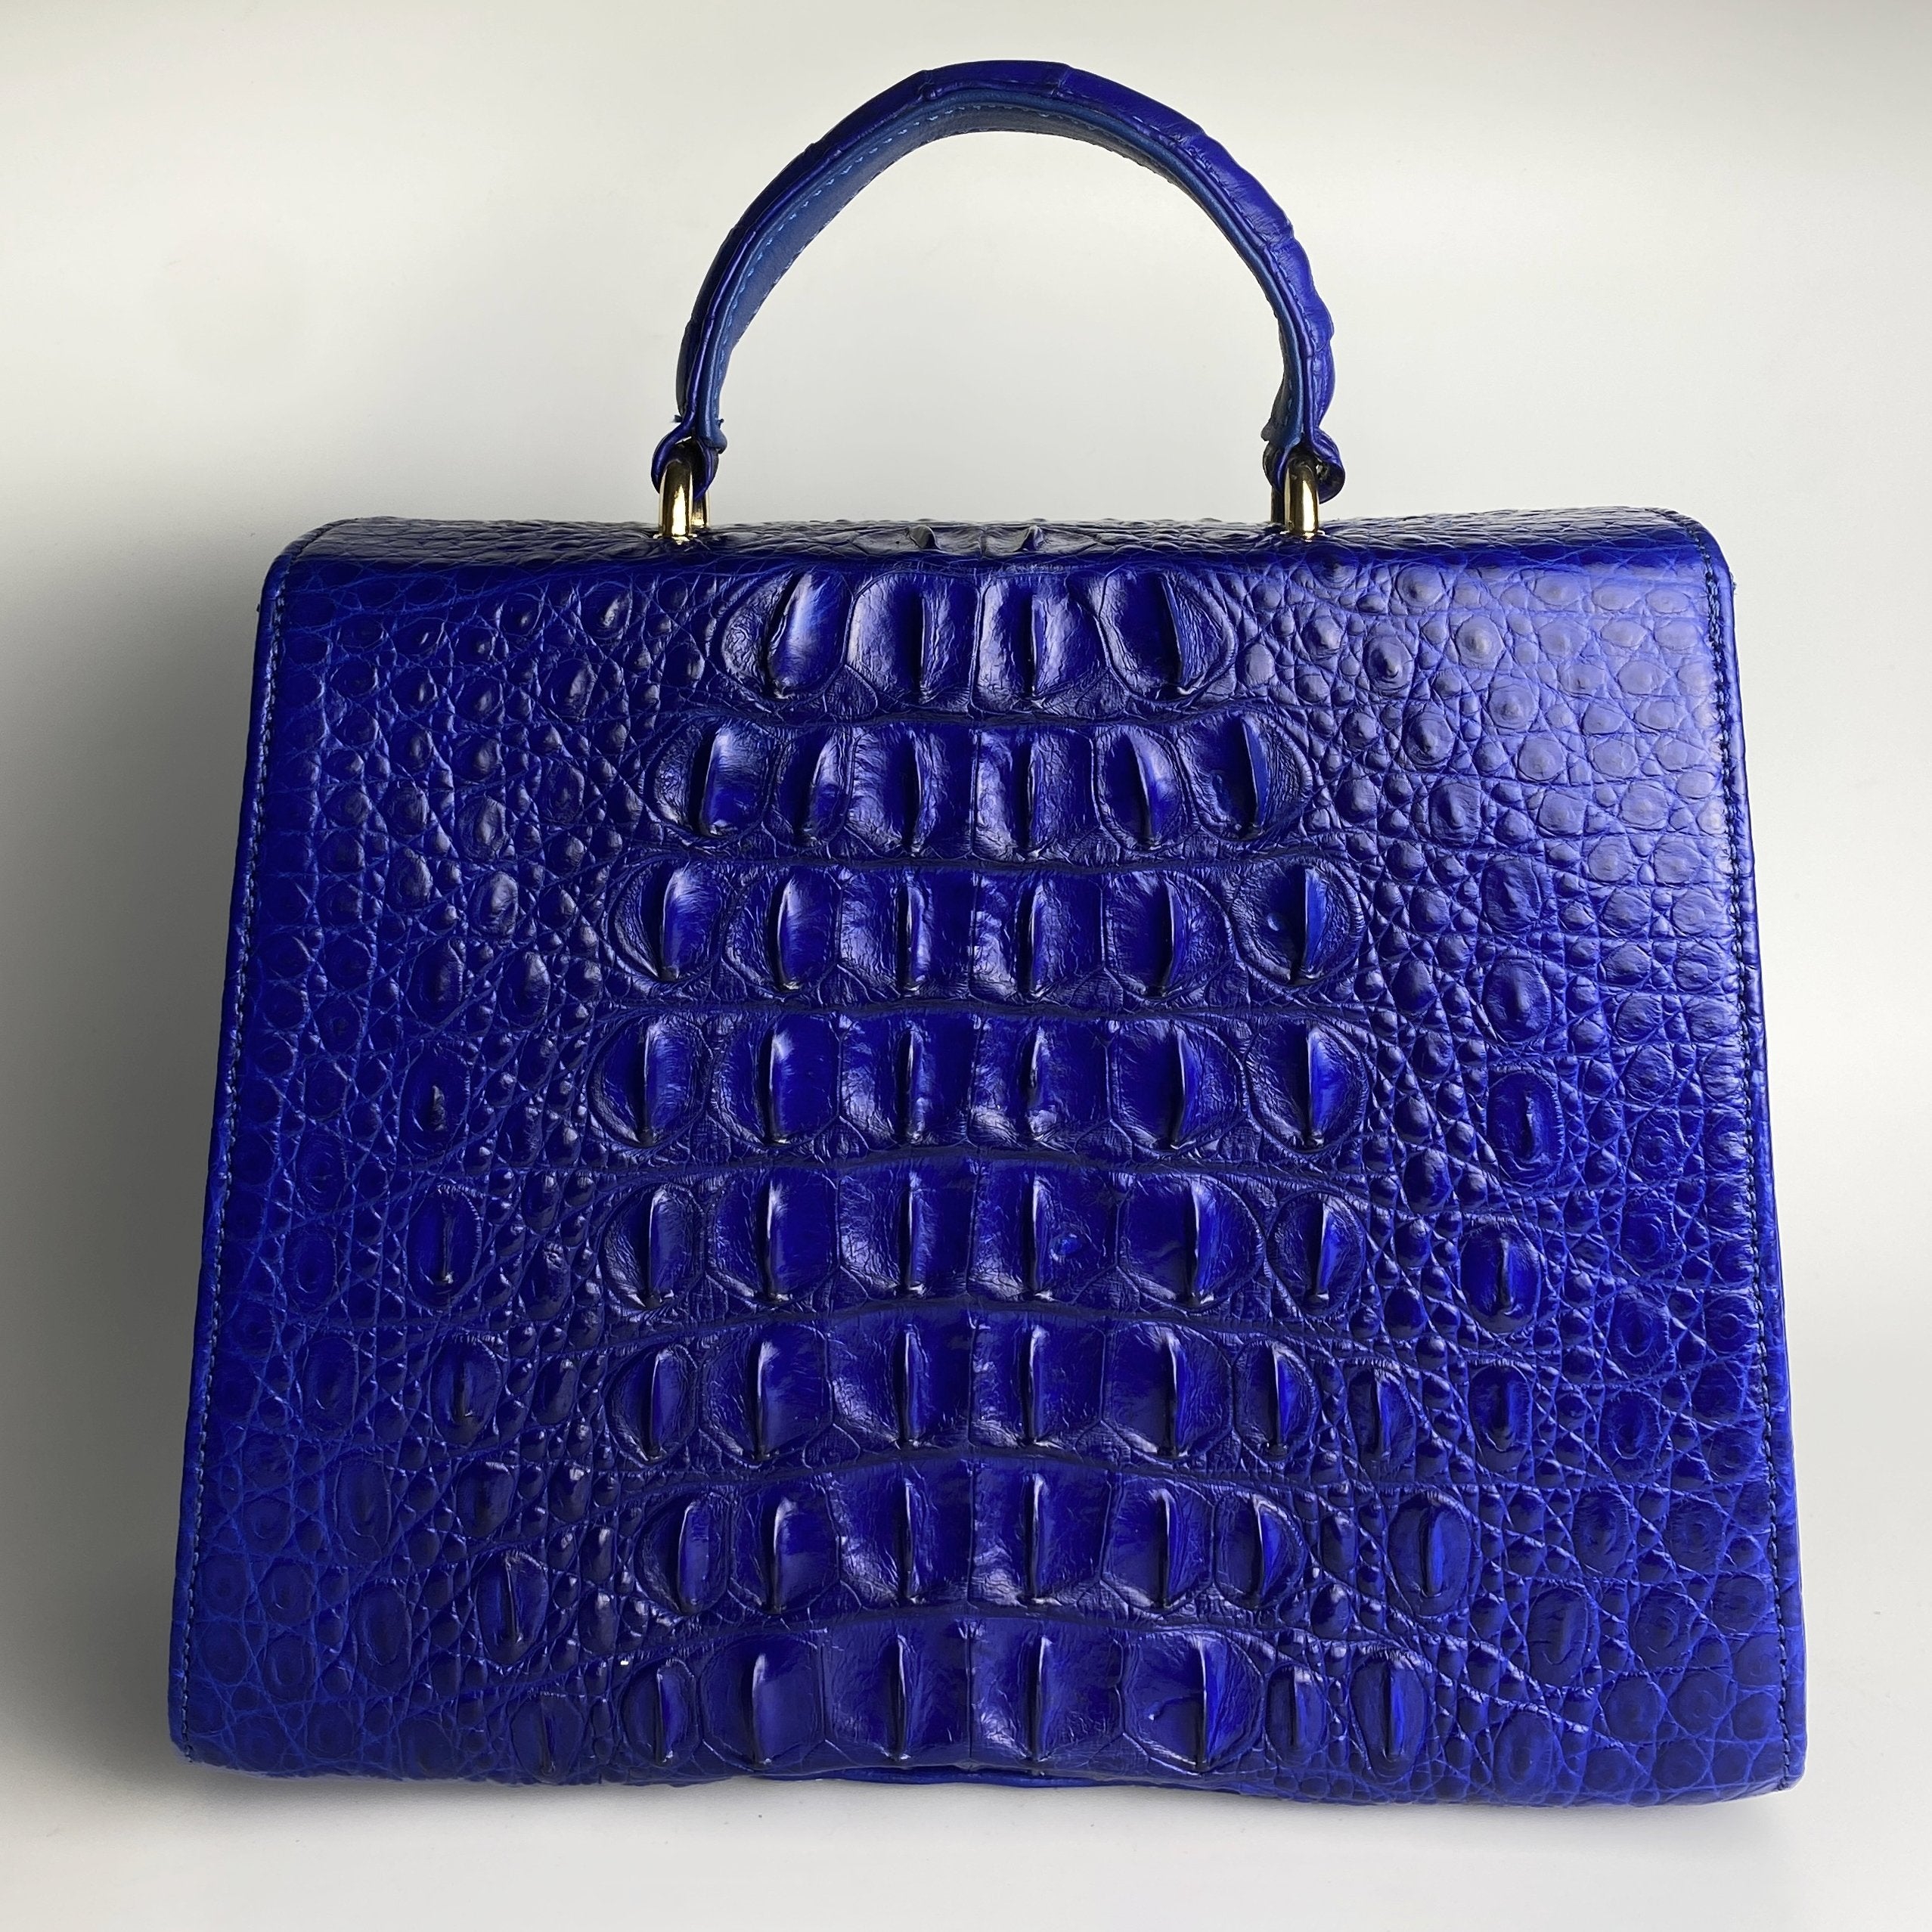 Discover the World's Most Luxurious Handbag - Blue Crocodile